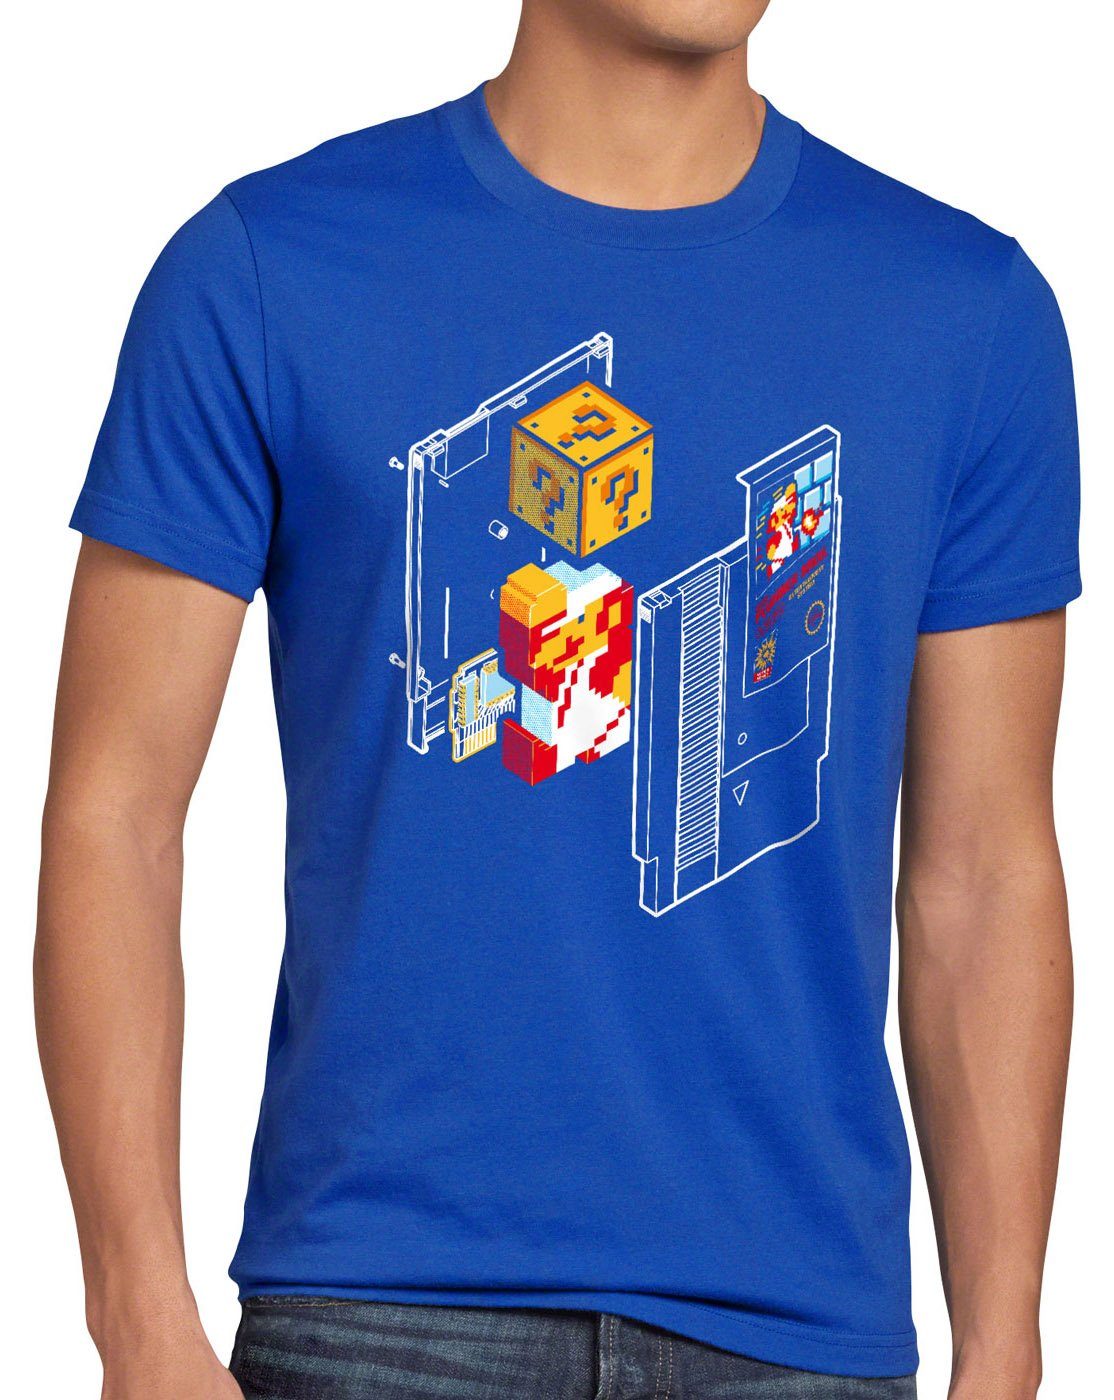 Plumber classic retro gamer blau 8-Bit mini nes T-Shirt Bros classic Print-Shirt snes style3 Herren